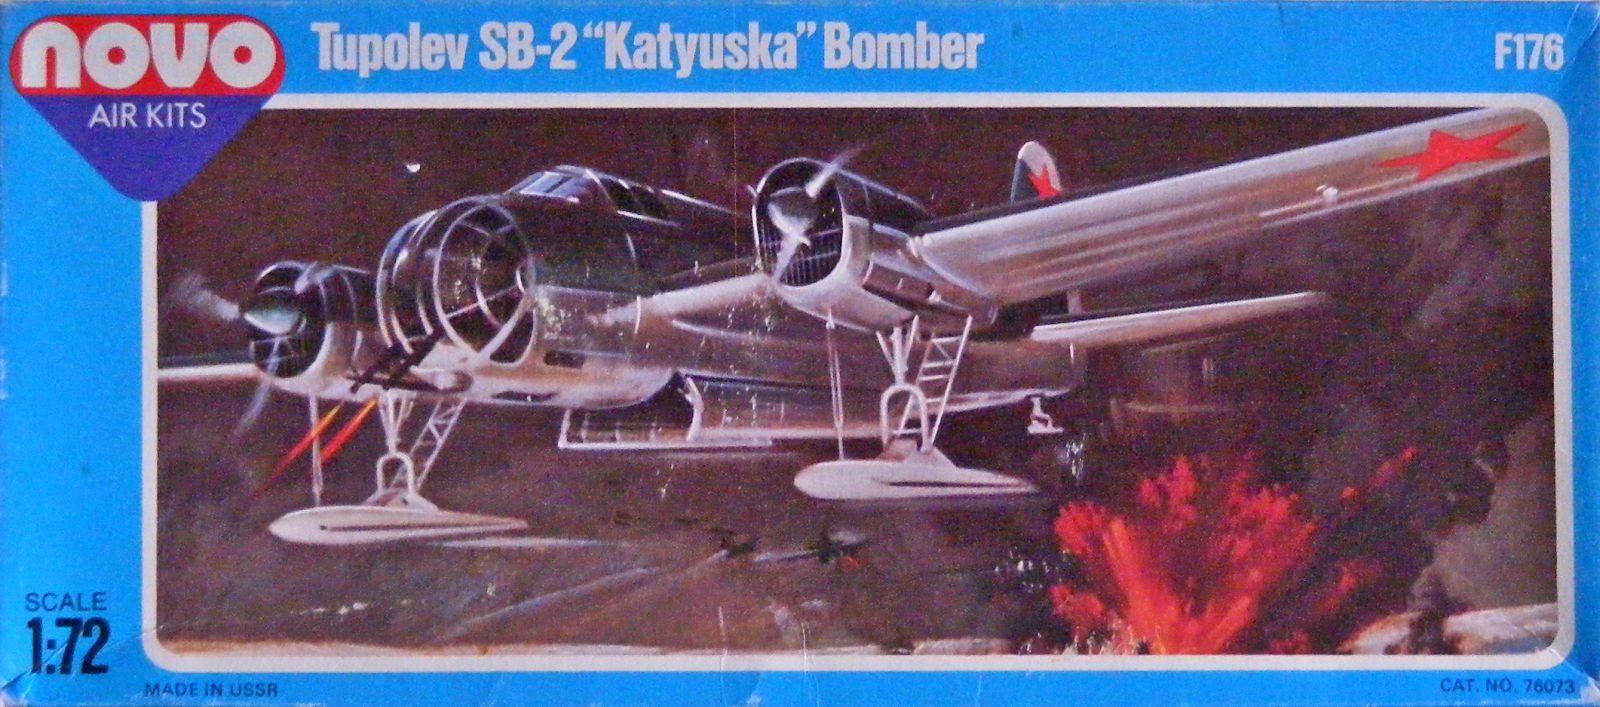 Typolev SB-2 Katyushka Bomber